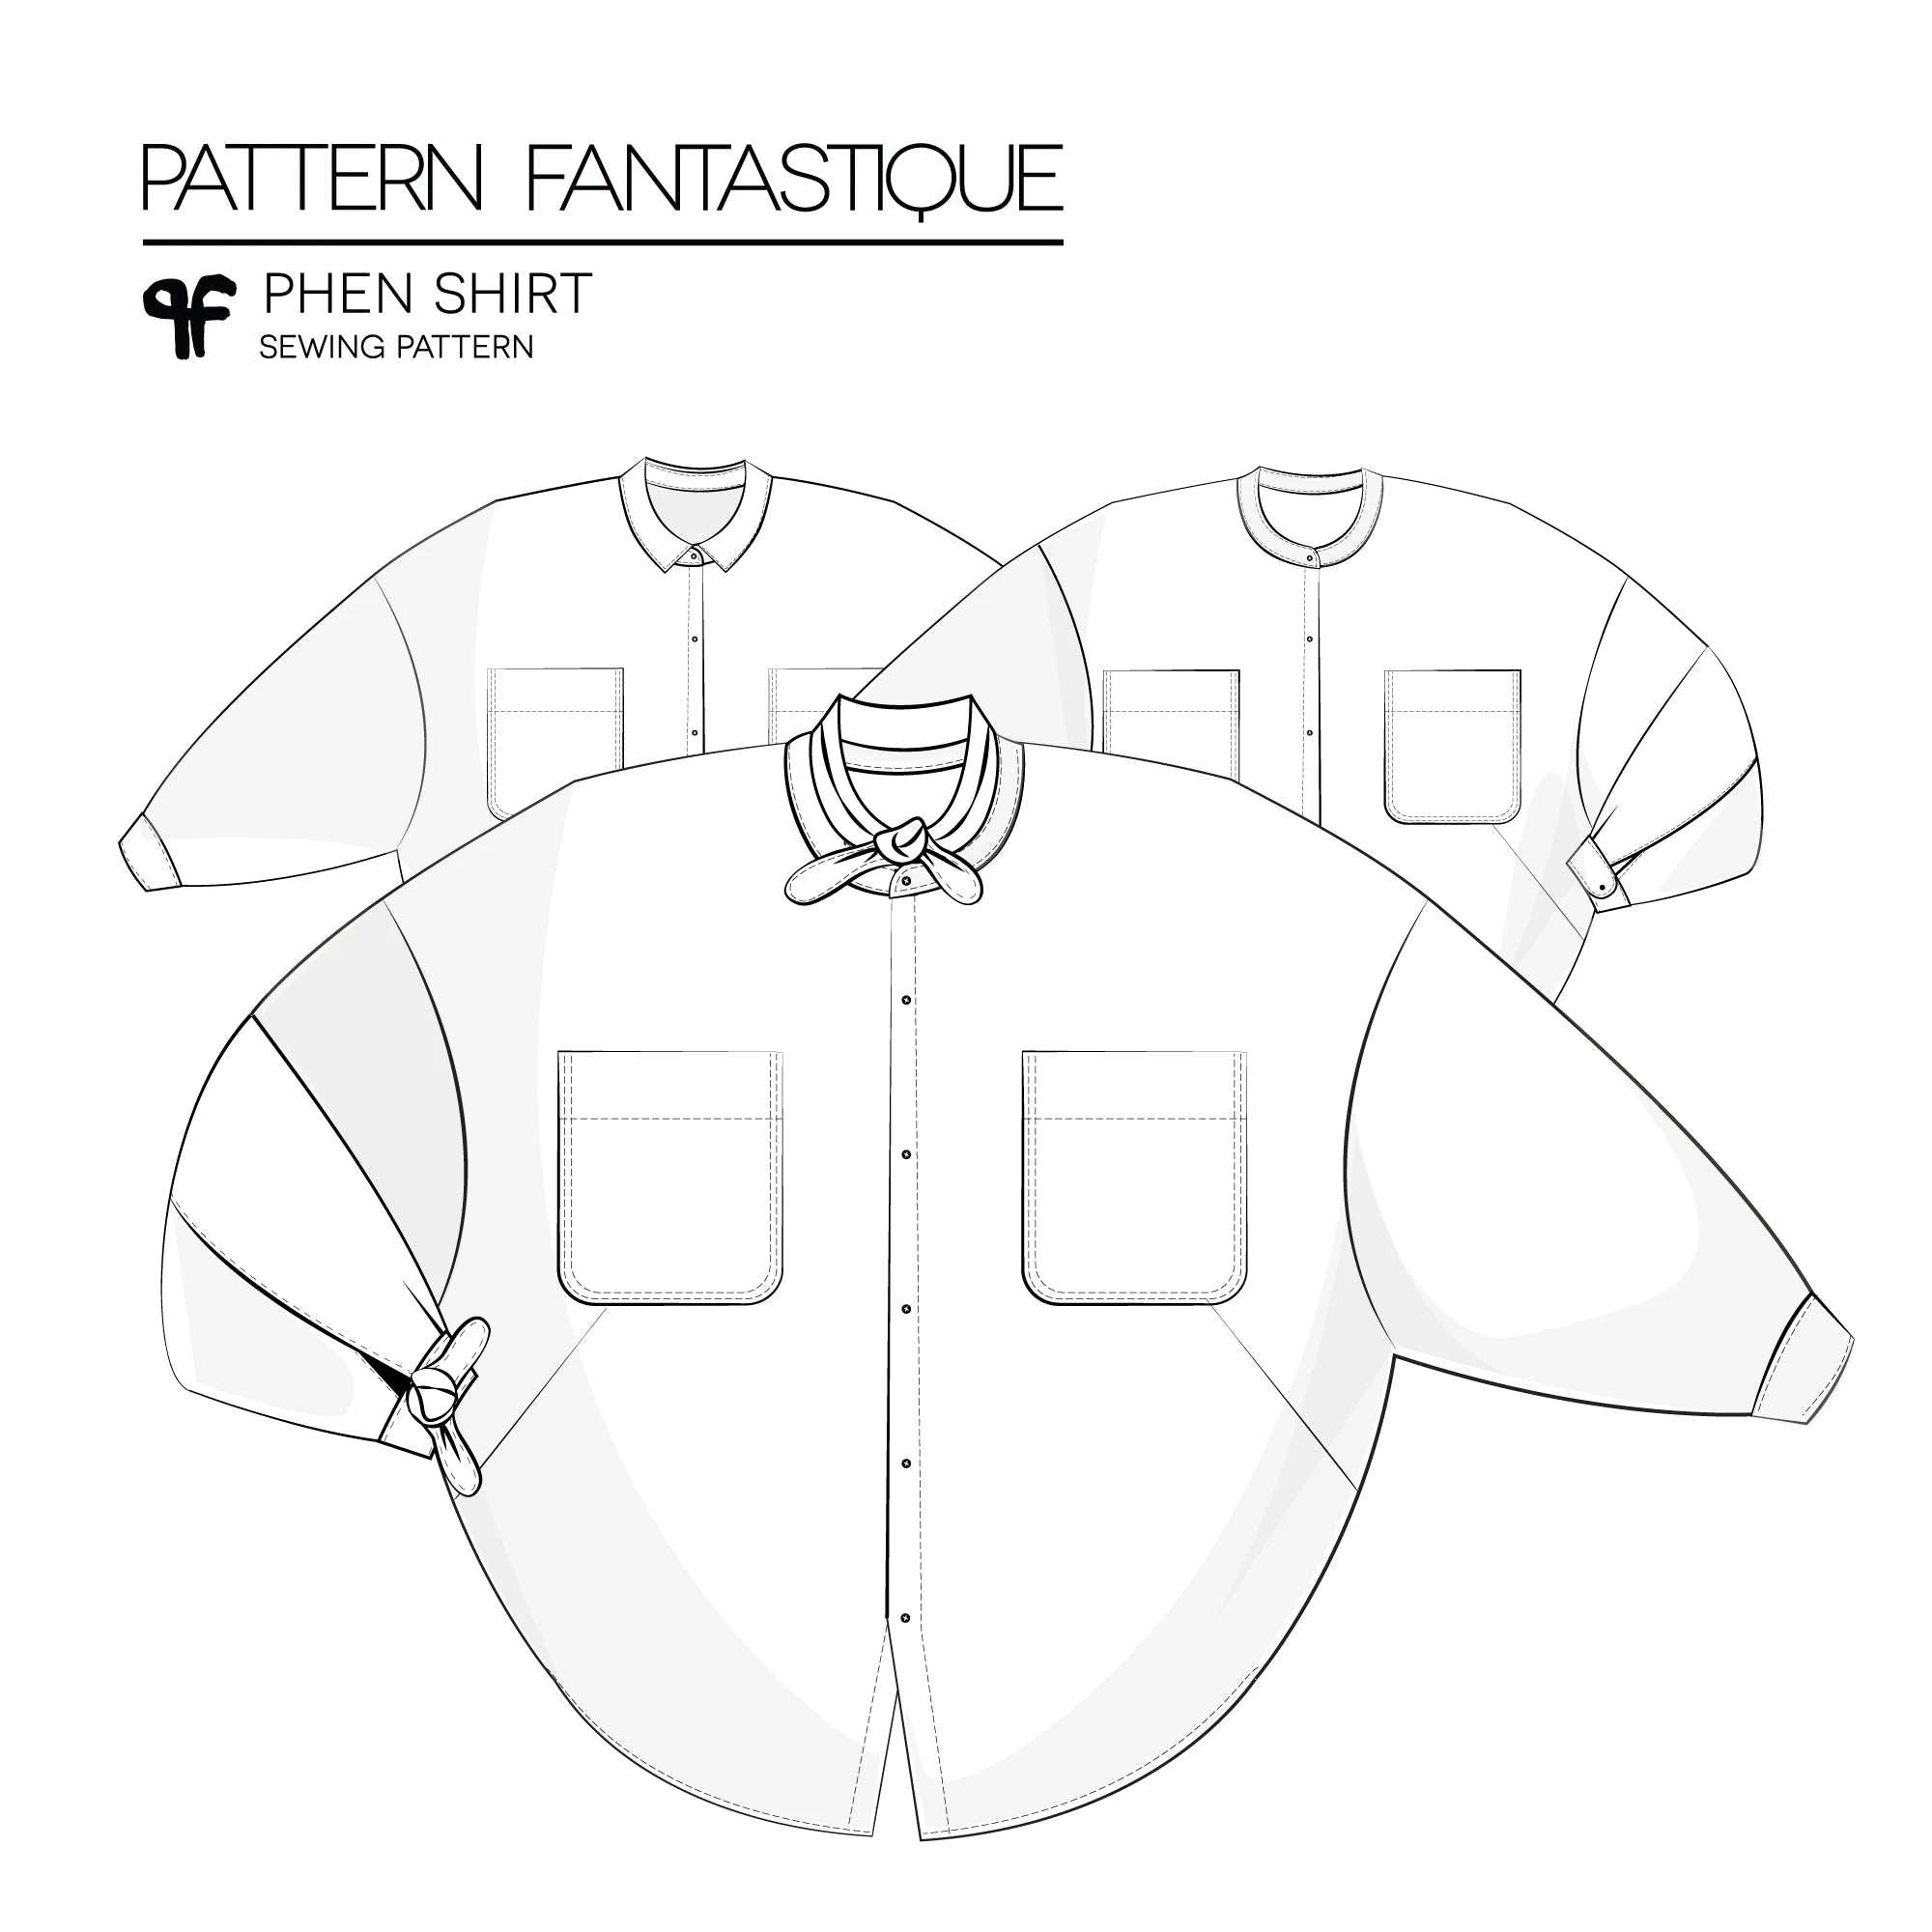 Pattern Fantastique Phen Shirt